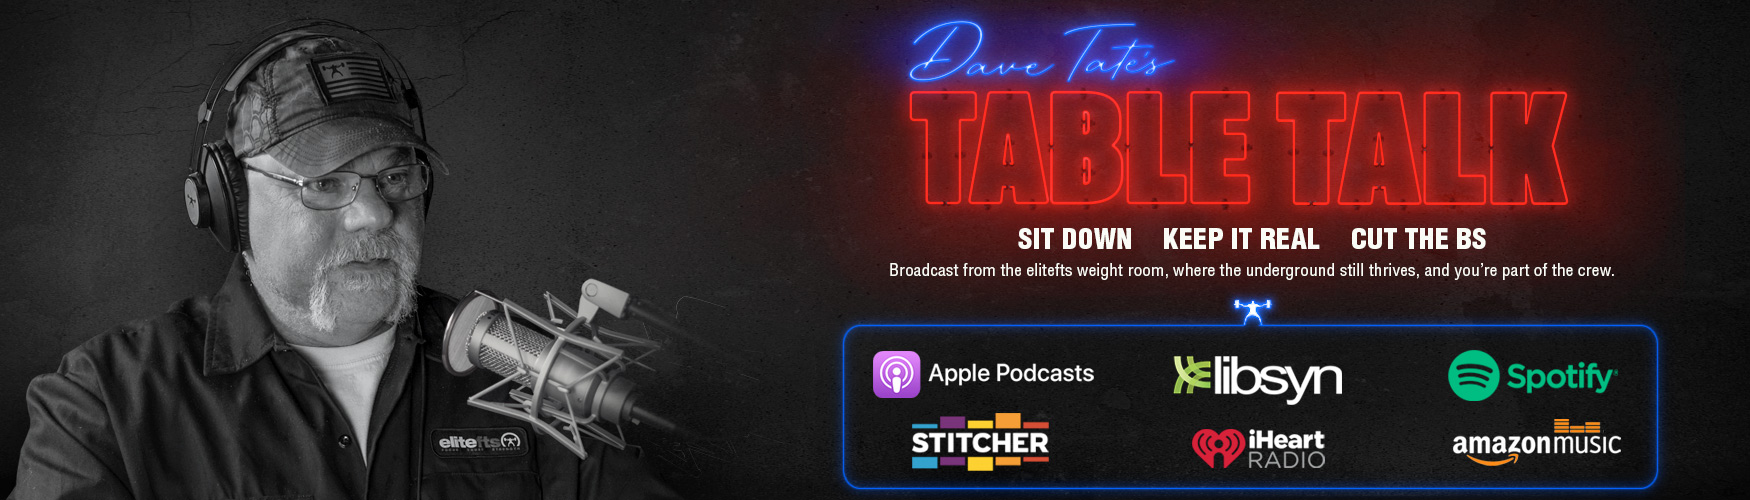 dave tates table talk podcast